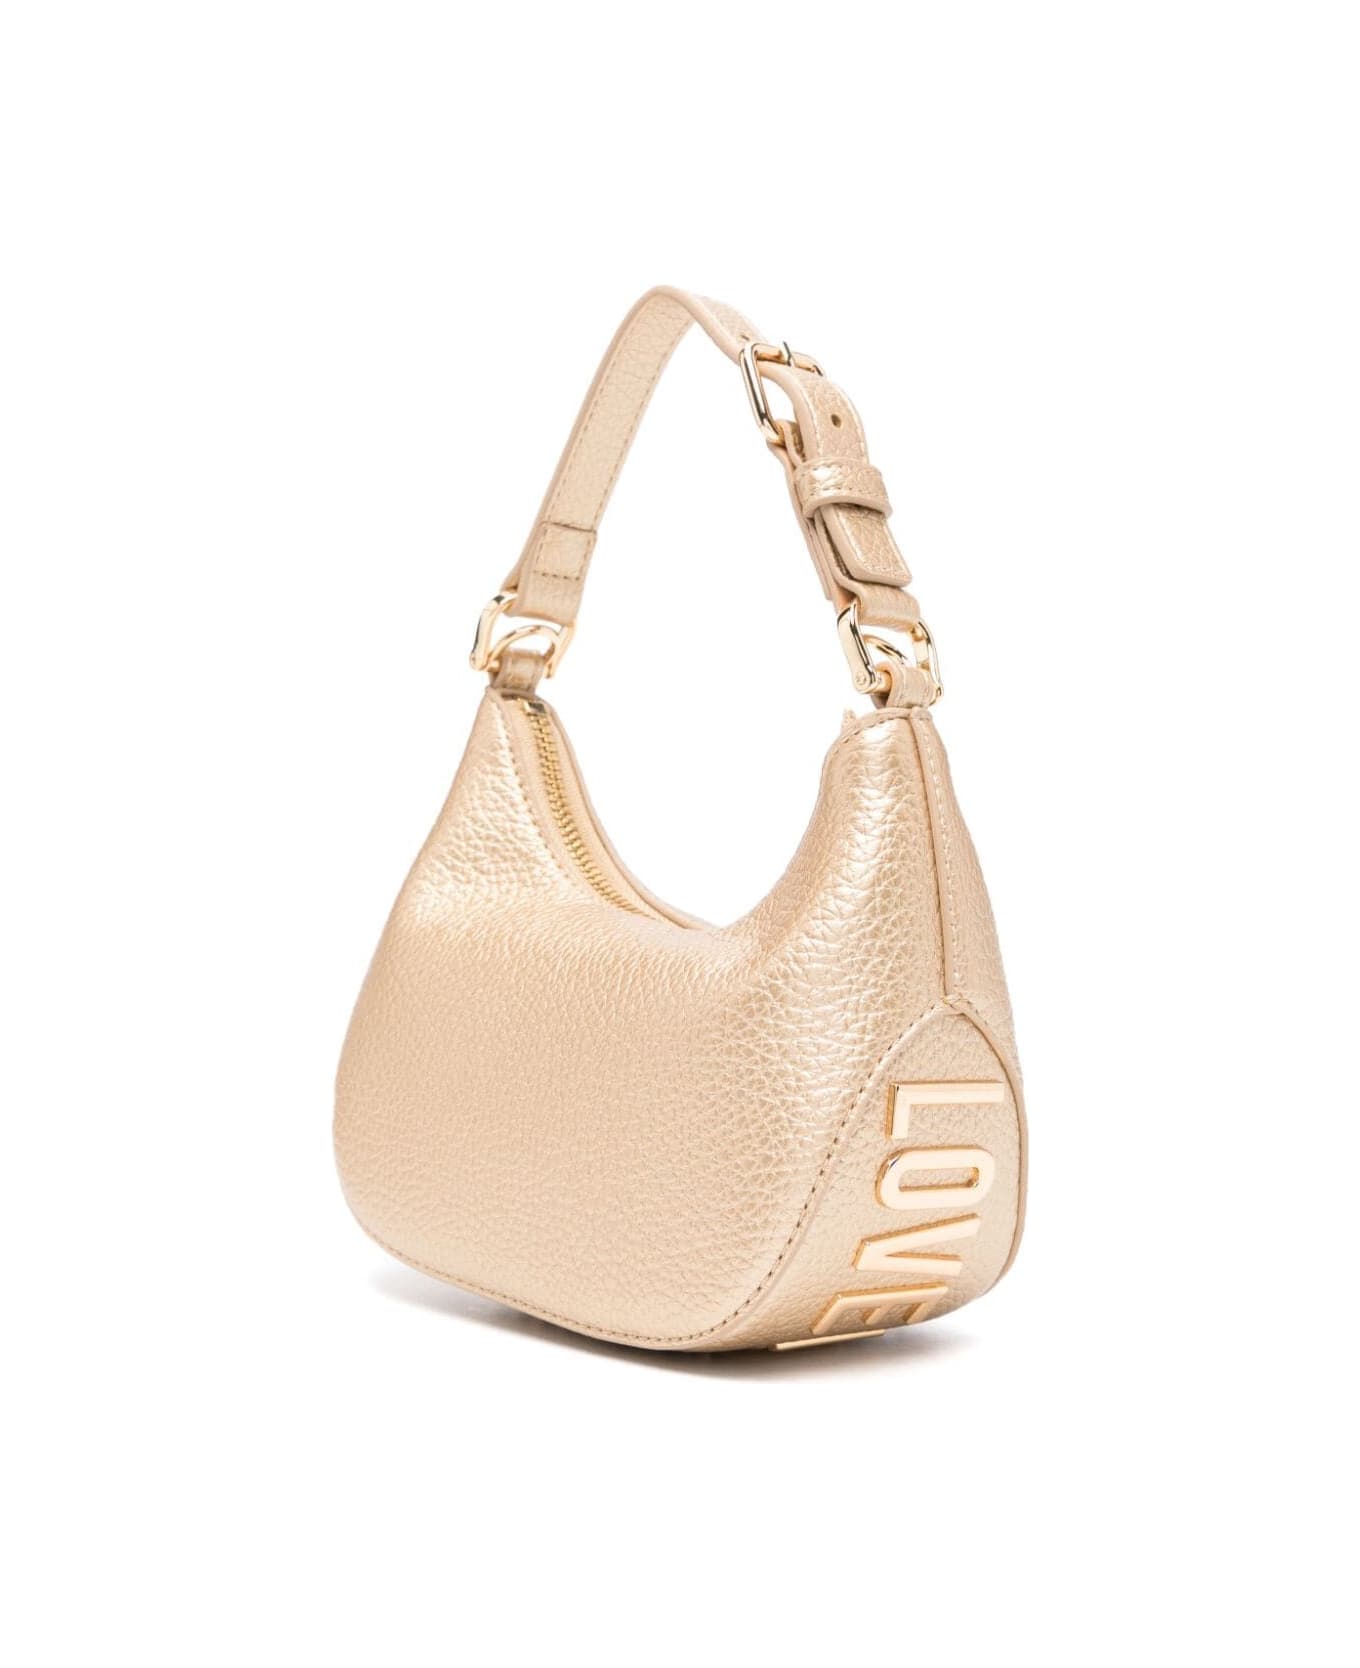 Love Moschino Laminated Shoulder Bag - A Gold トートバッグ